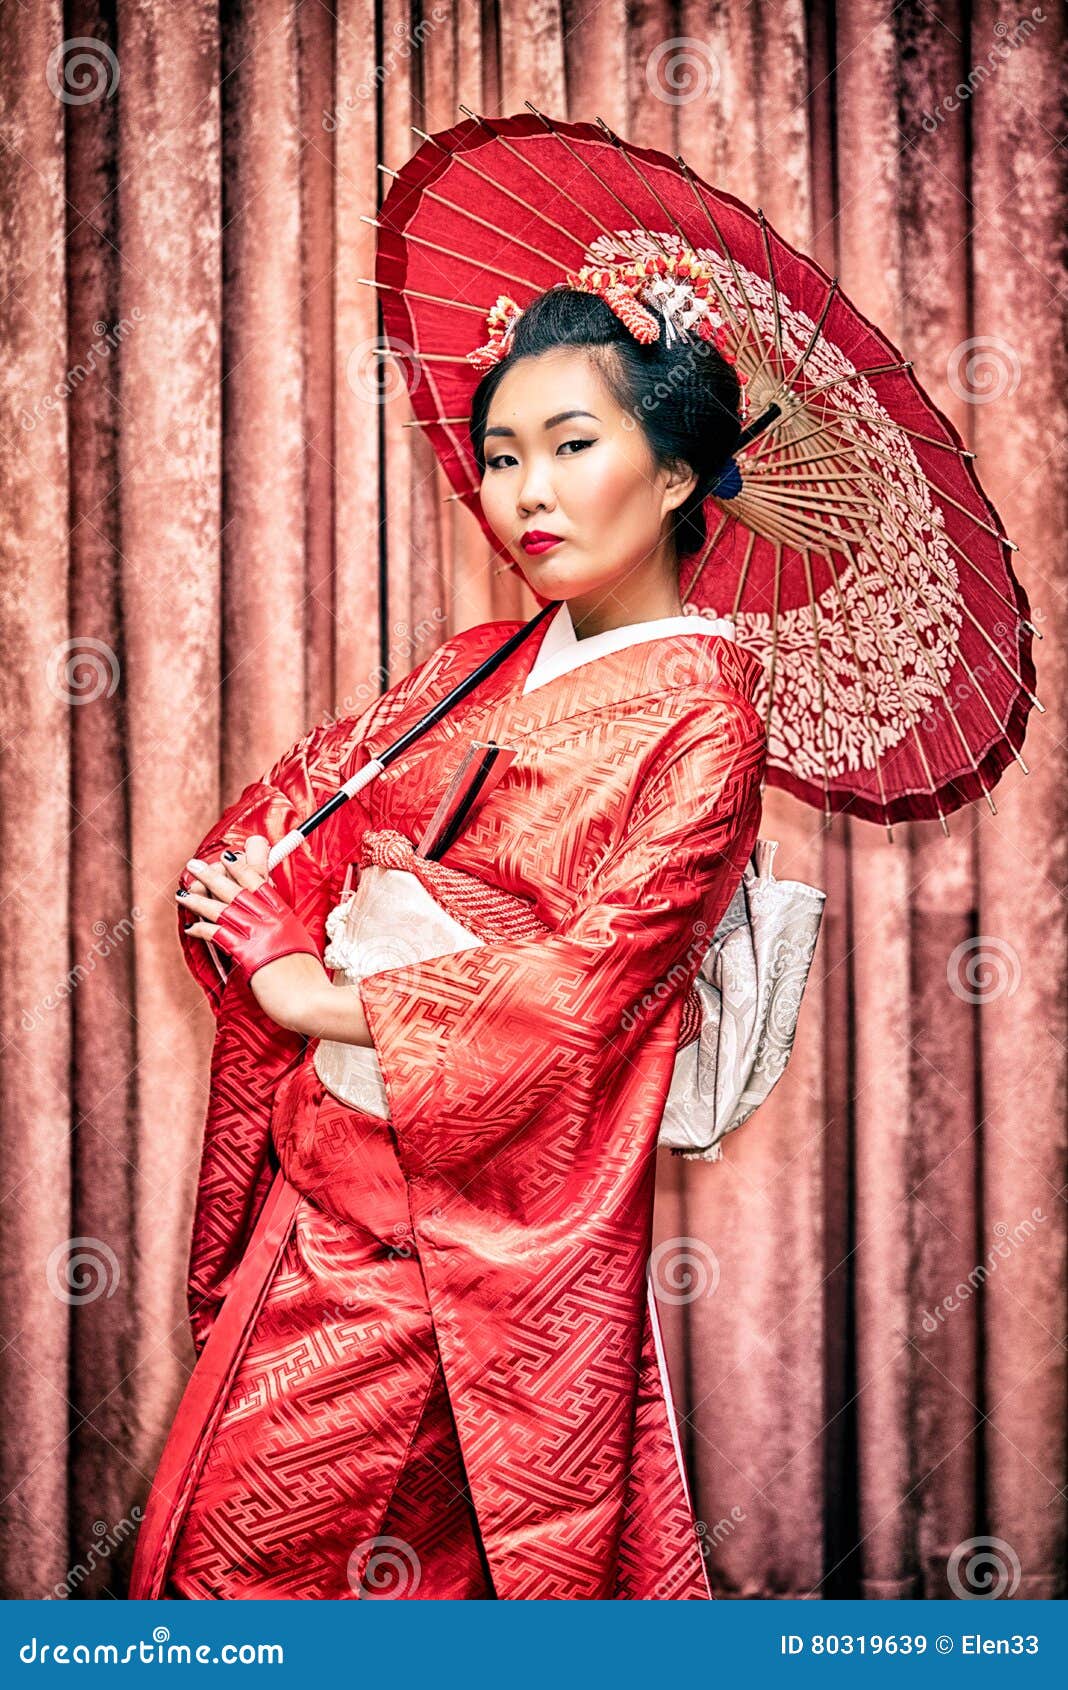 Reis Voorstad Rationalisatie Chinese woman stock image. Image of fashionable, kimono - 80319639